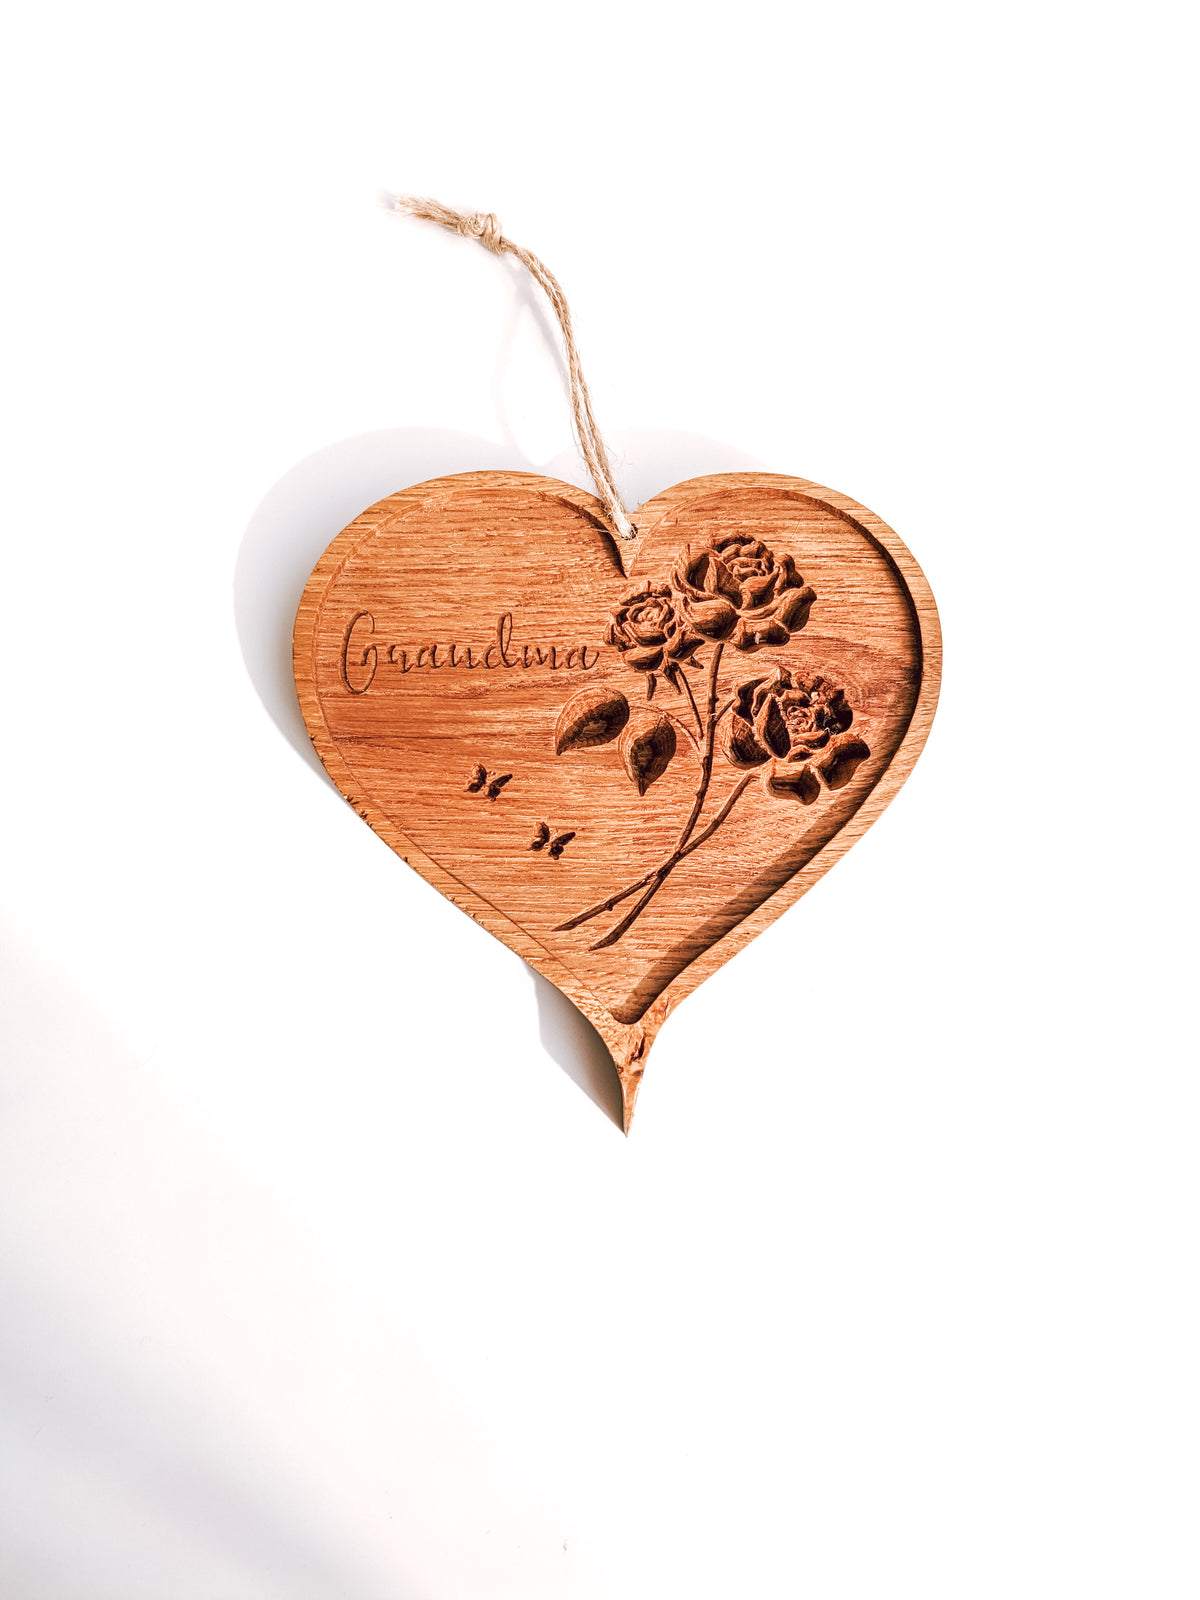 Wooden Hanging Heart - Grandma